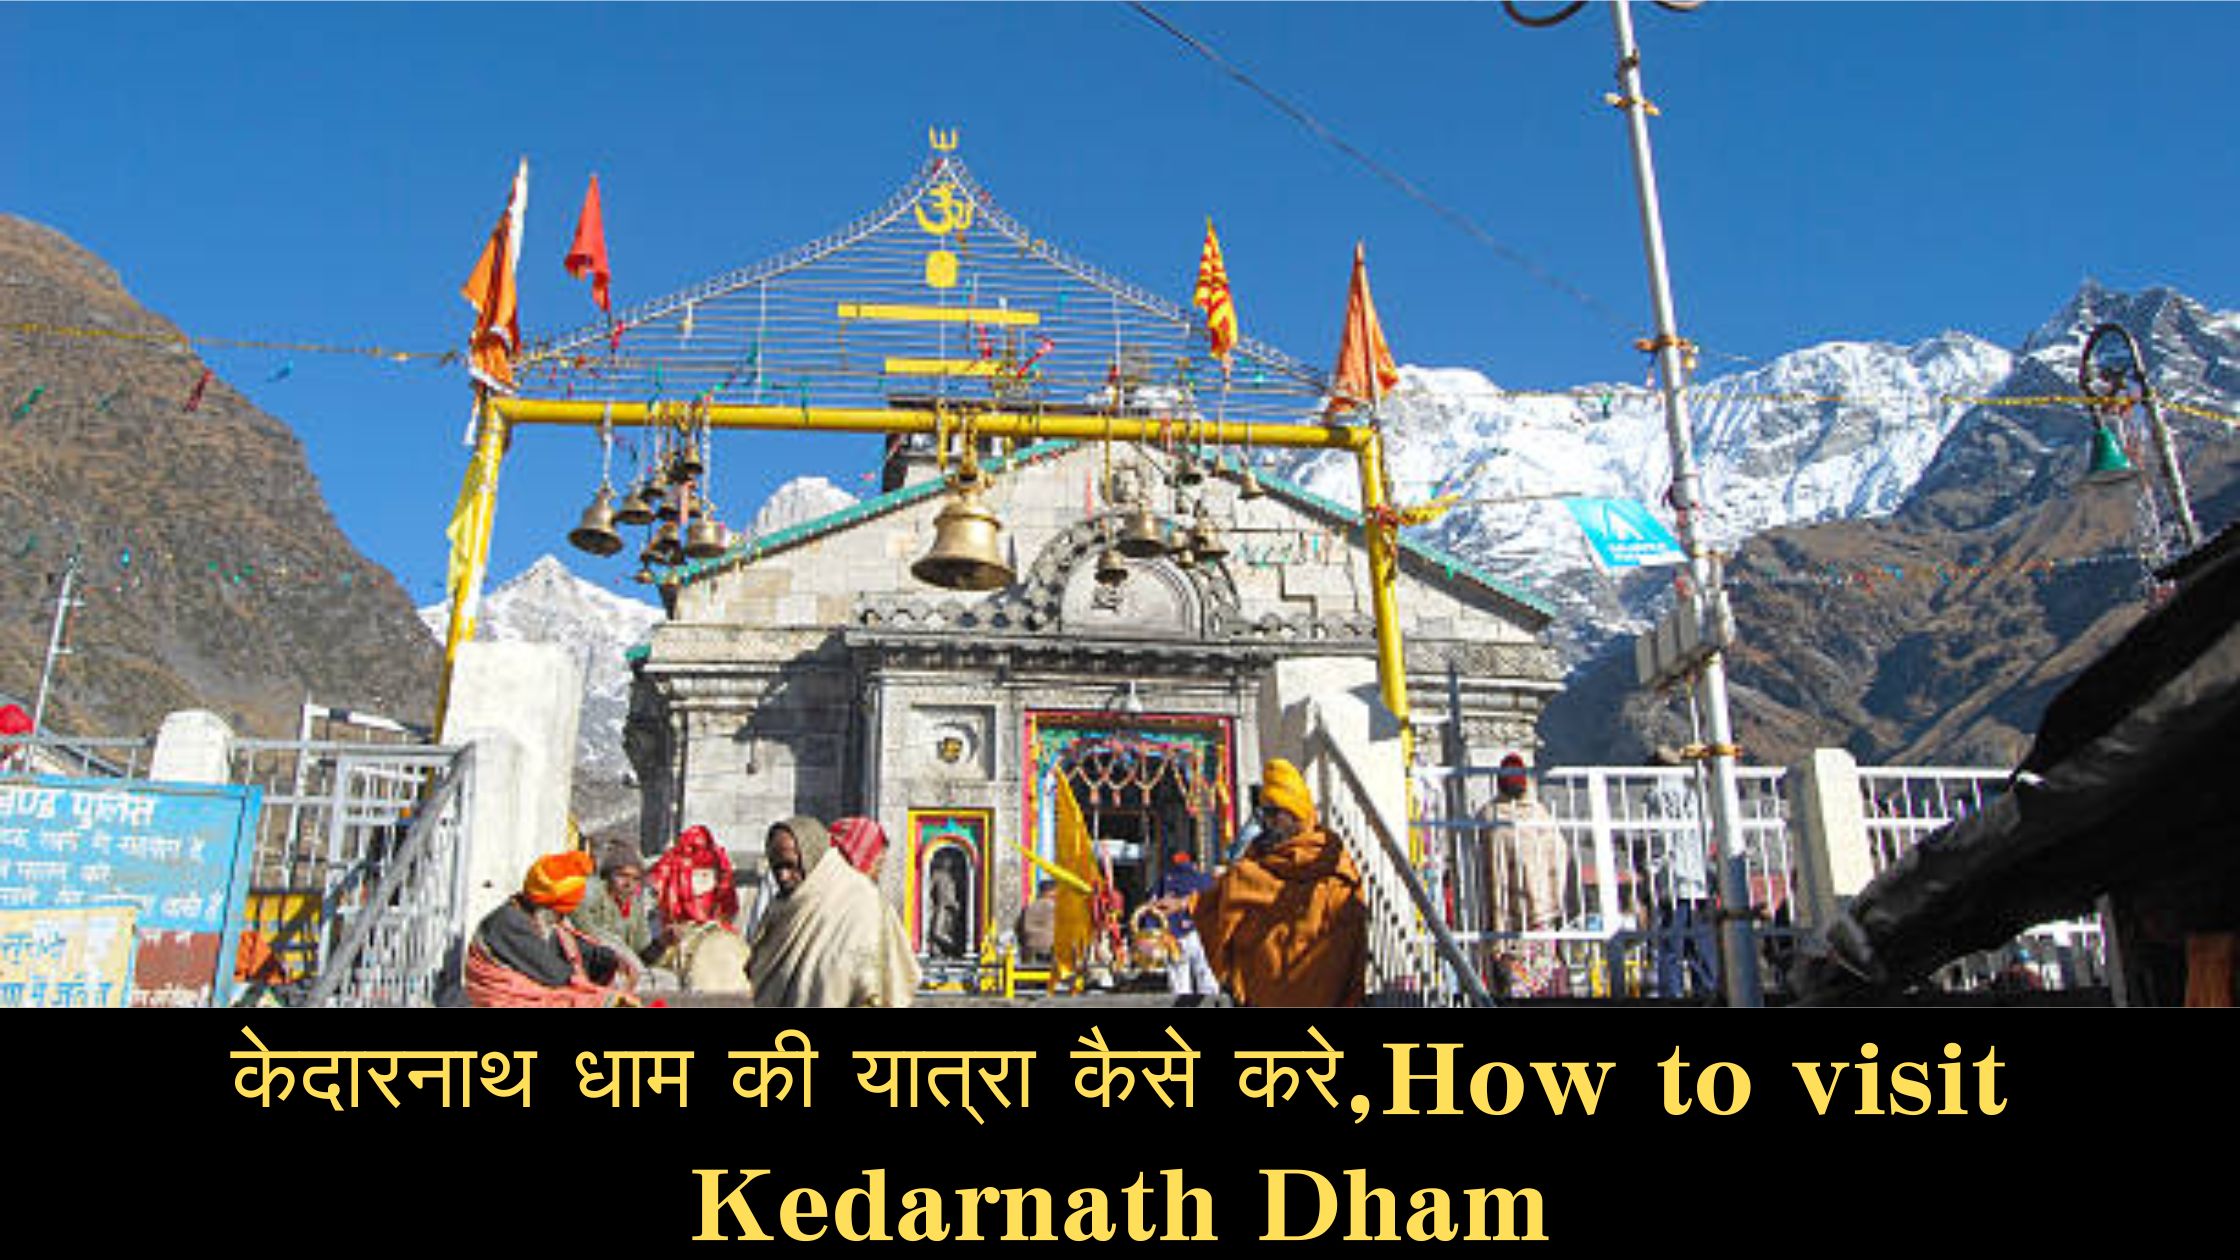 How to visit Kedarnath Dham